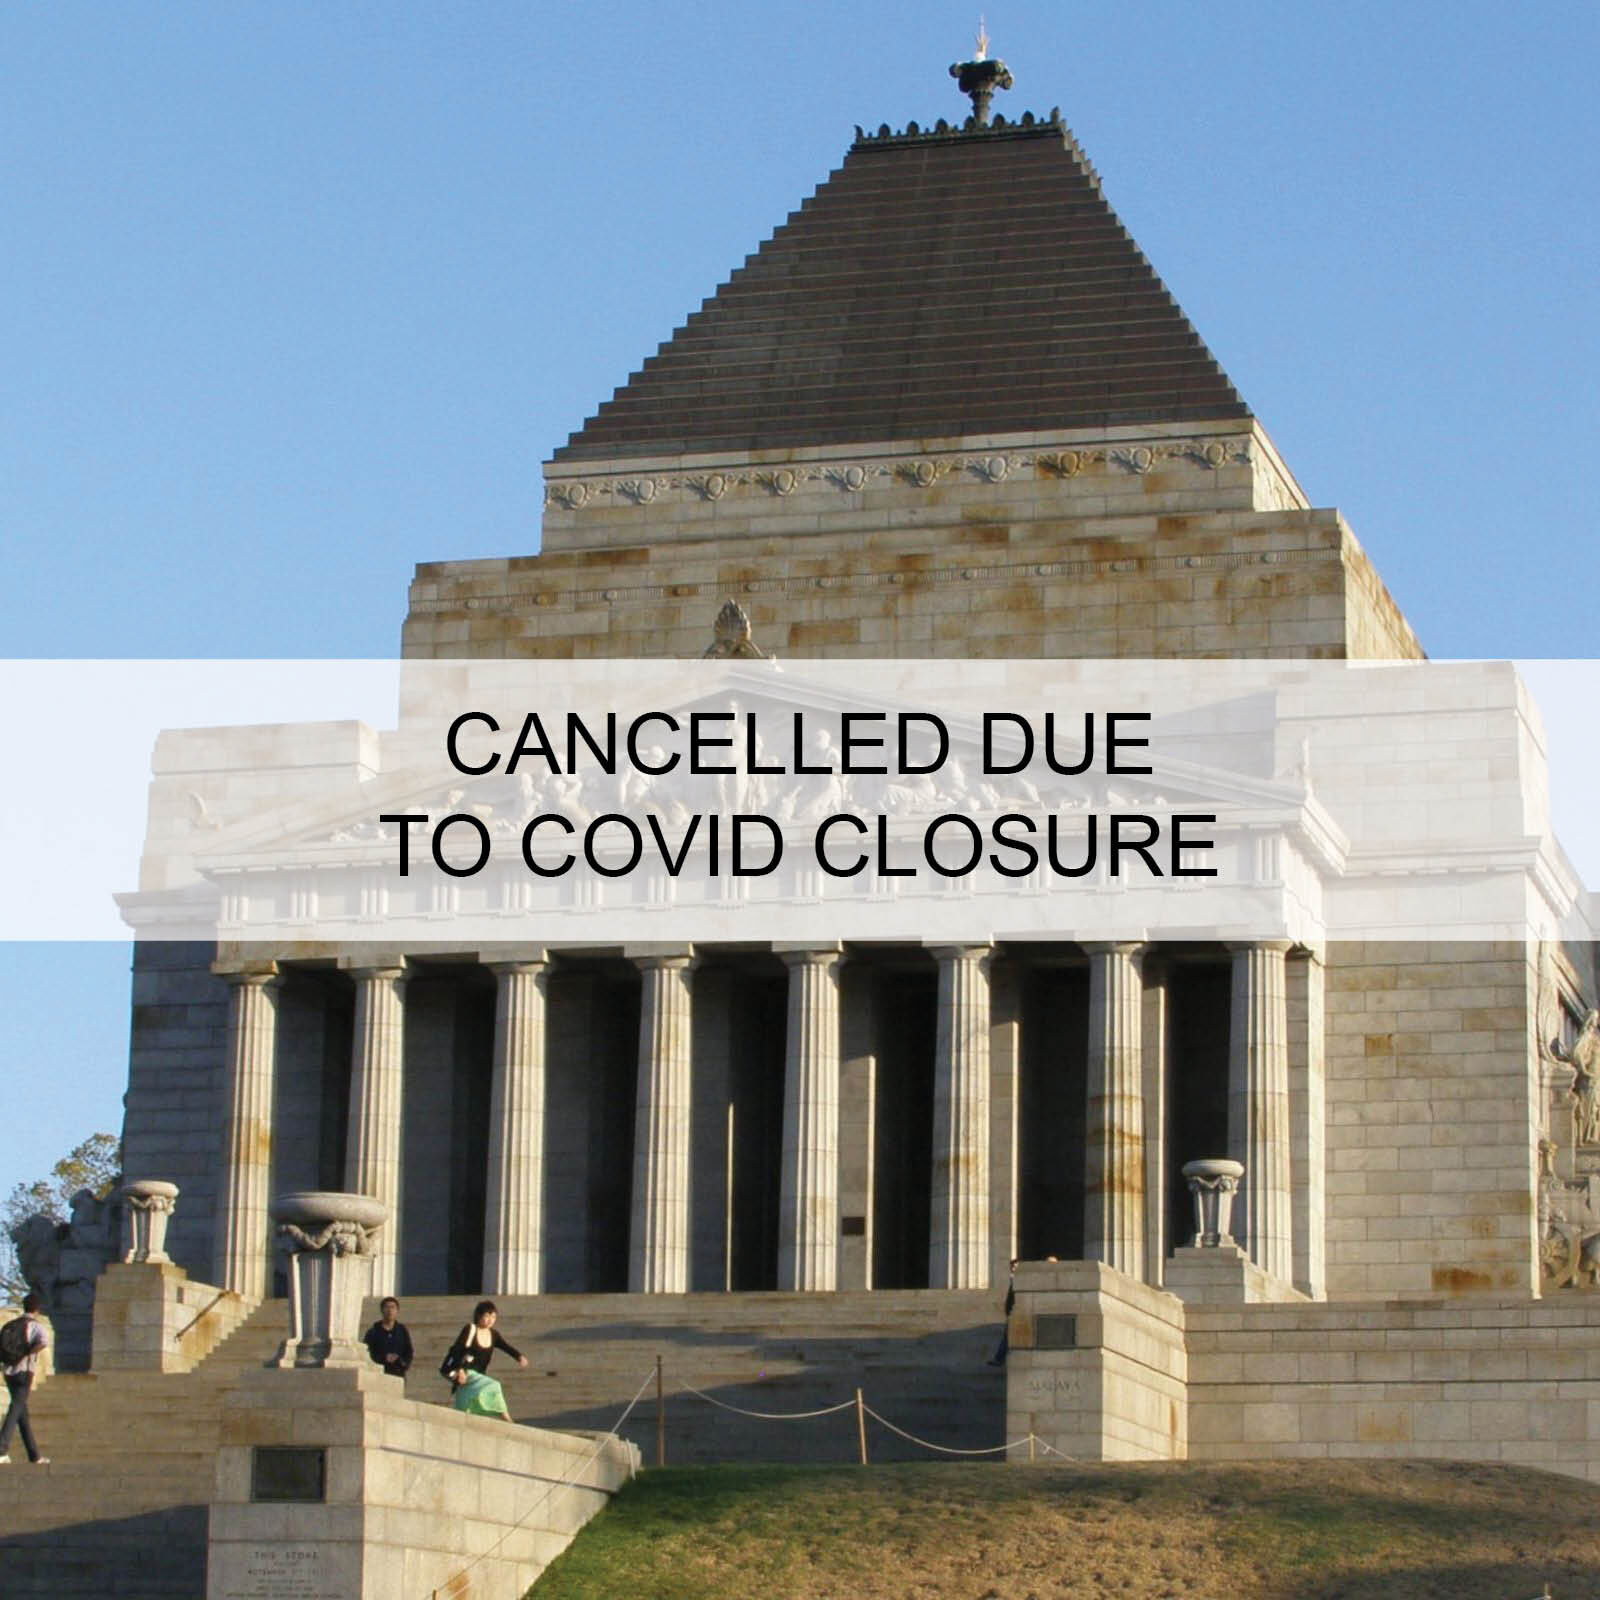 The Shrine cancelled